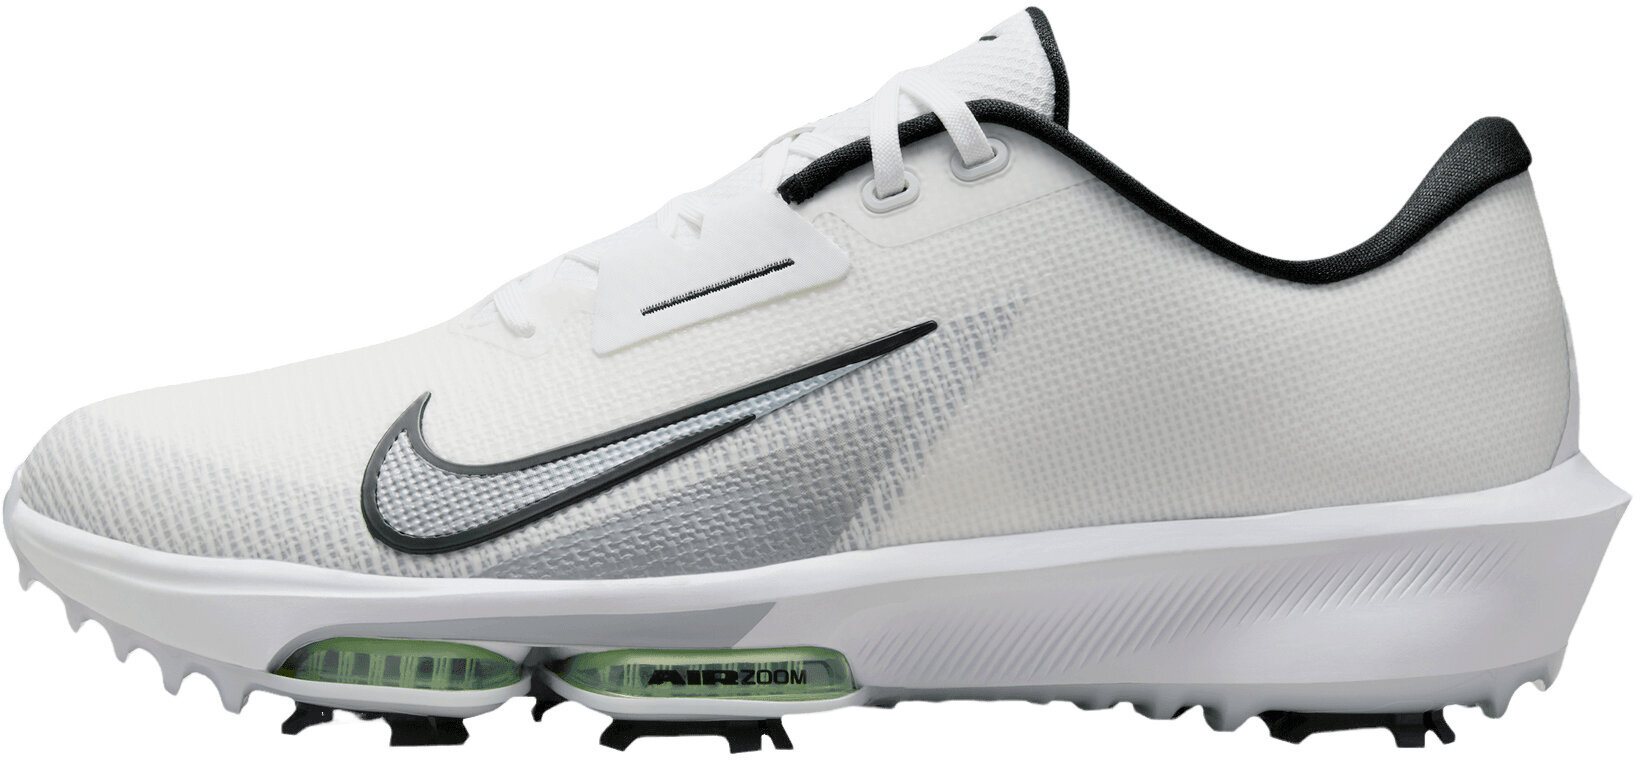 Nike Air Zoom Infinity Tour Next 2 Unisex Golf Shoes White/Black/Vapor Green/Pure Platinum 42,5